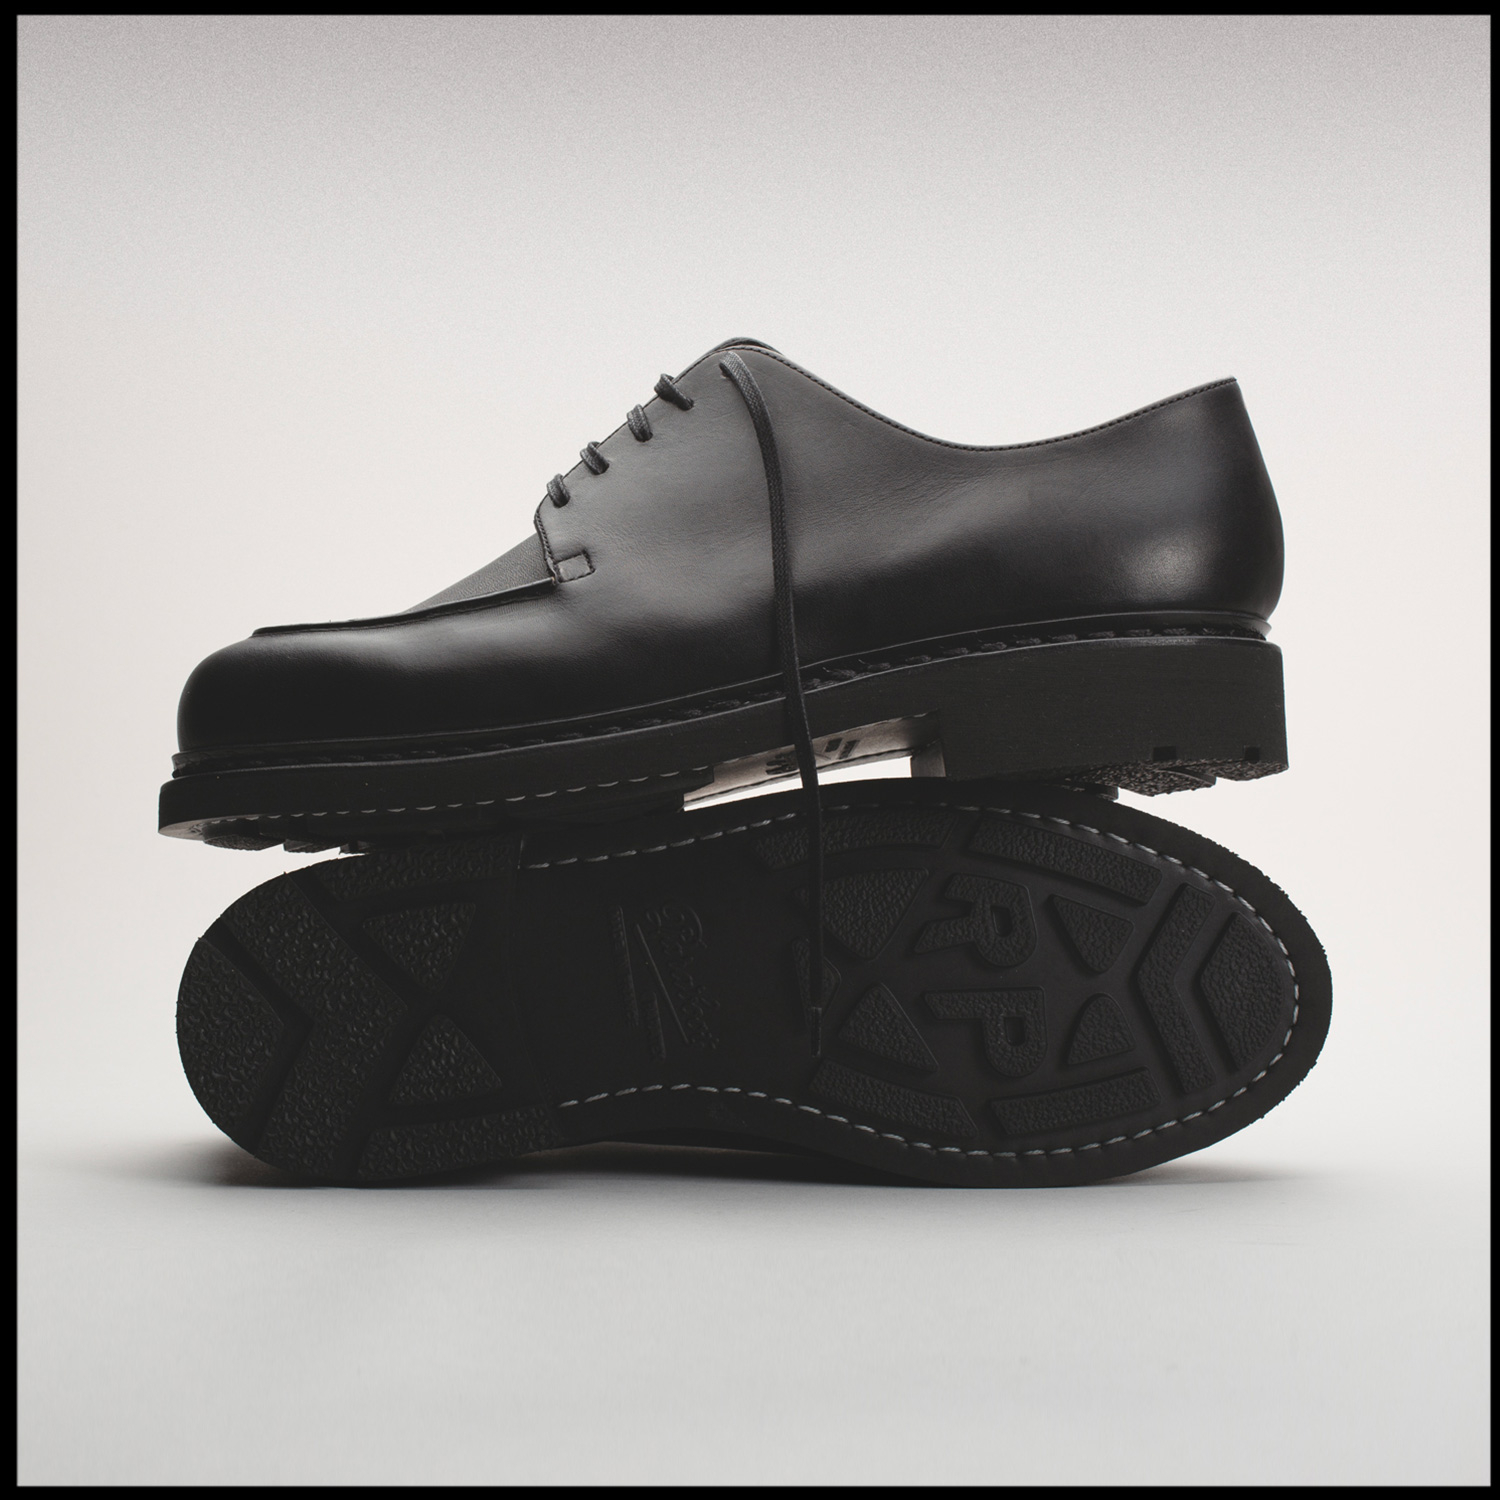 MIRAGE shoes in Black color by Arpenteur